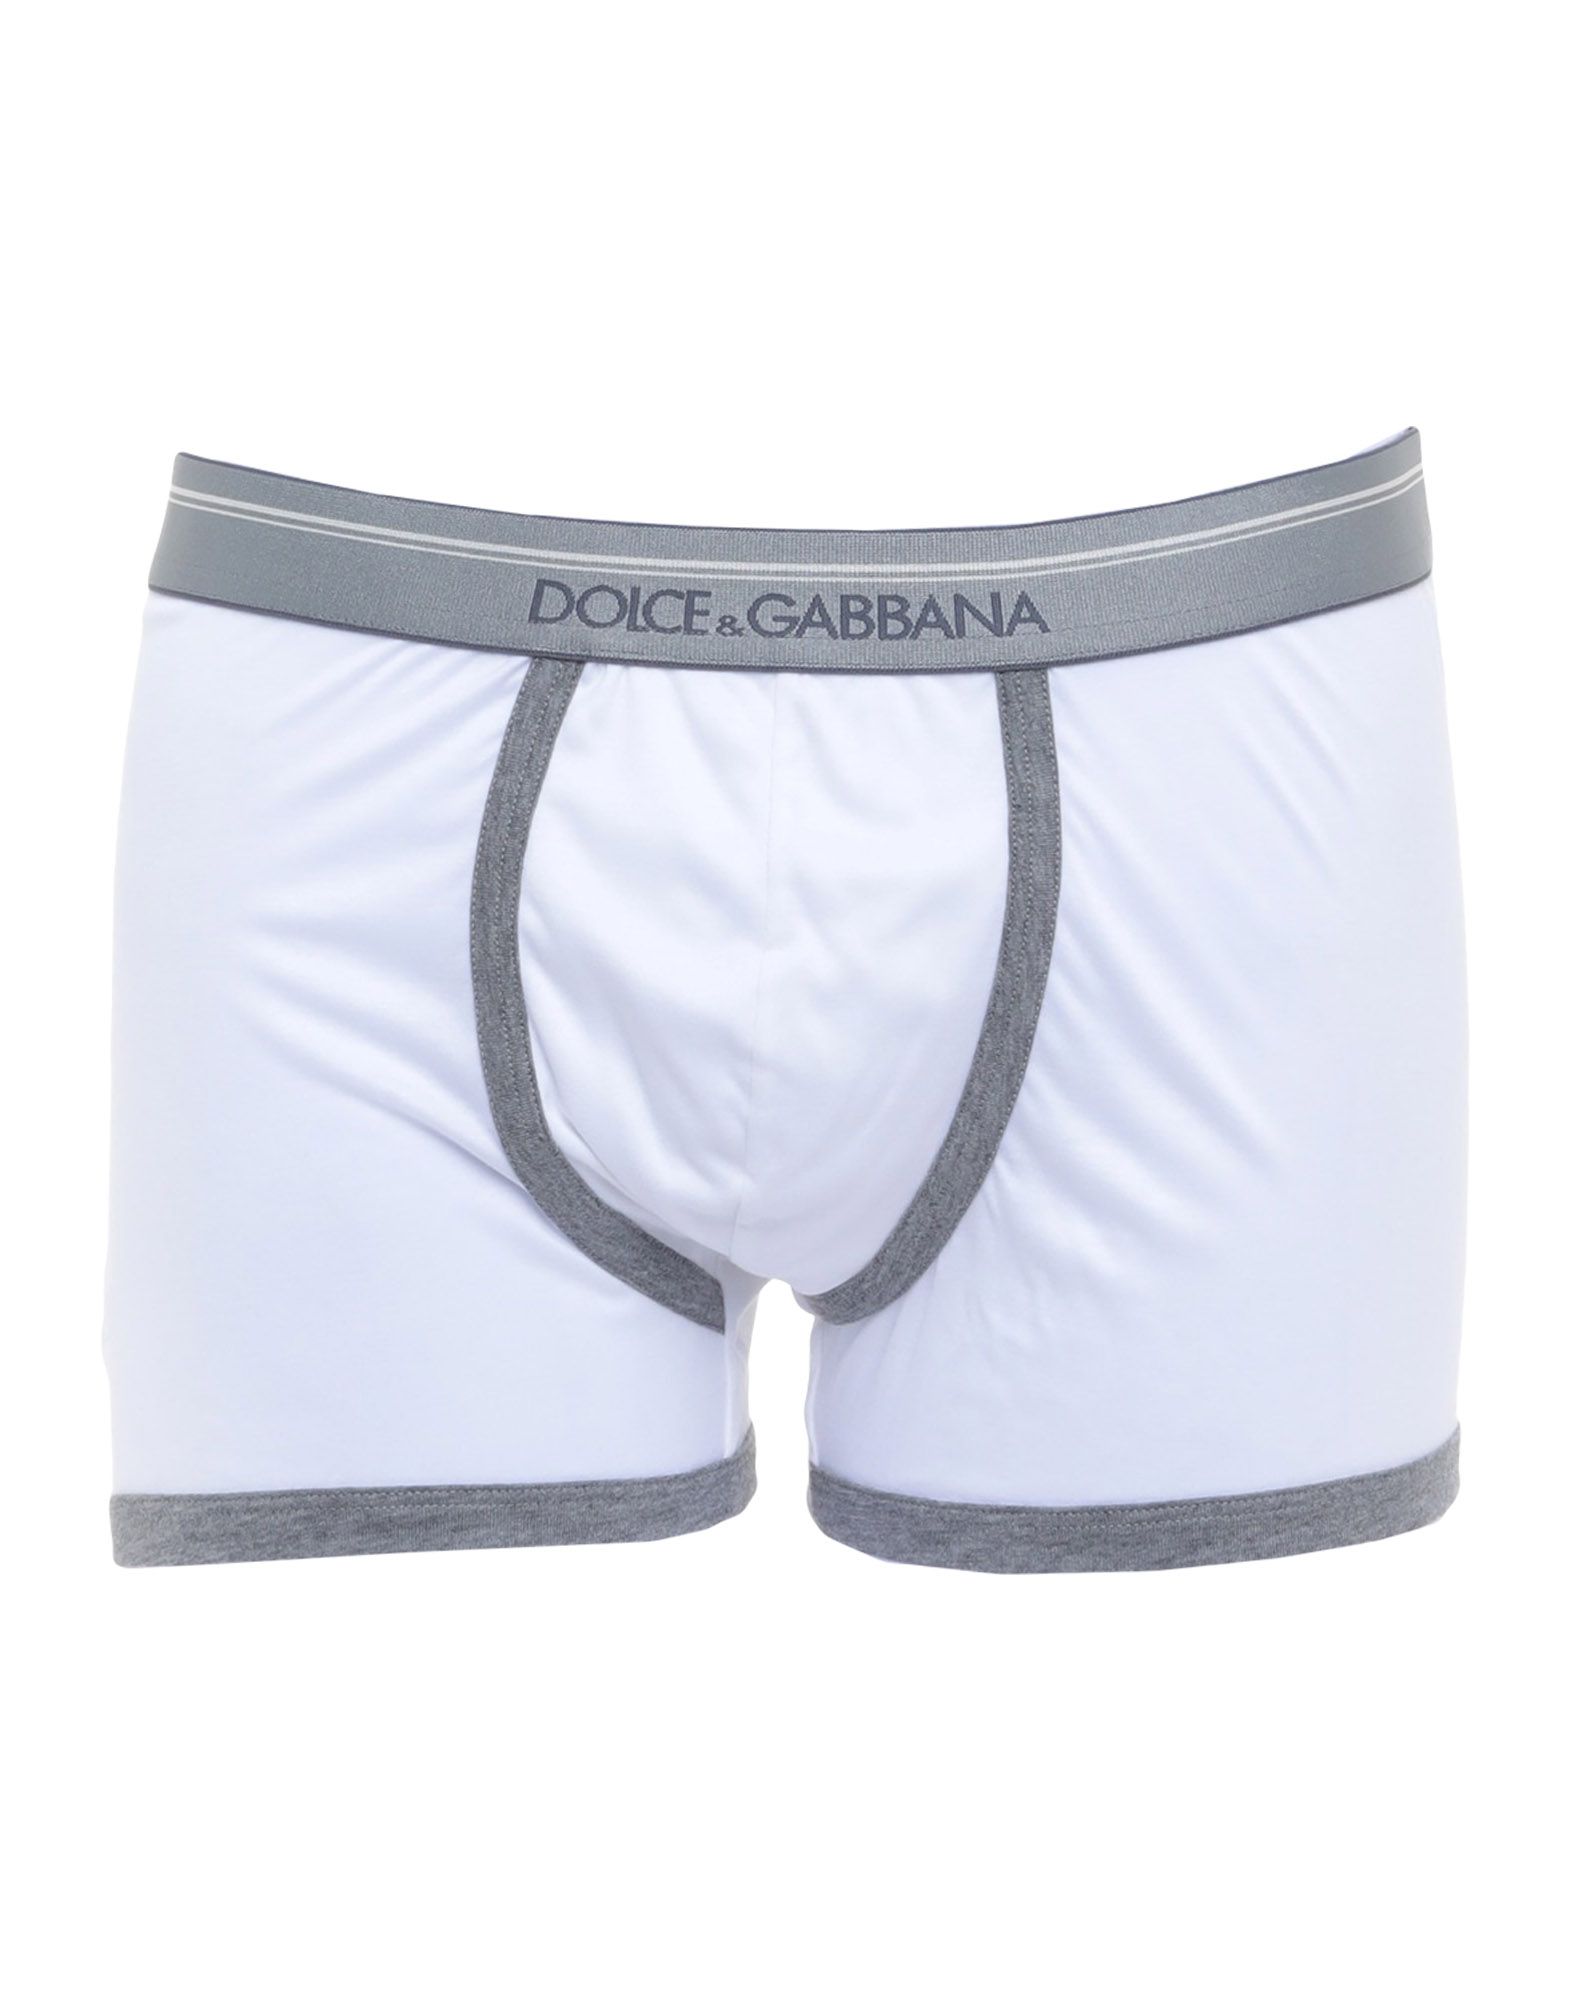 Dolce & Gabbana Boxer In White